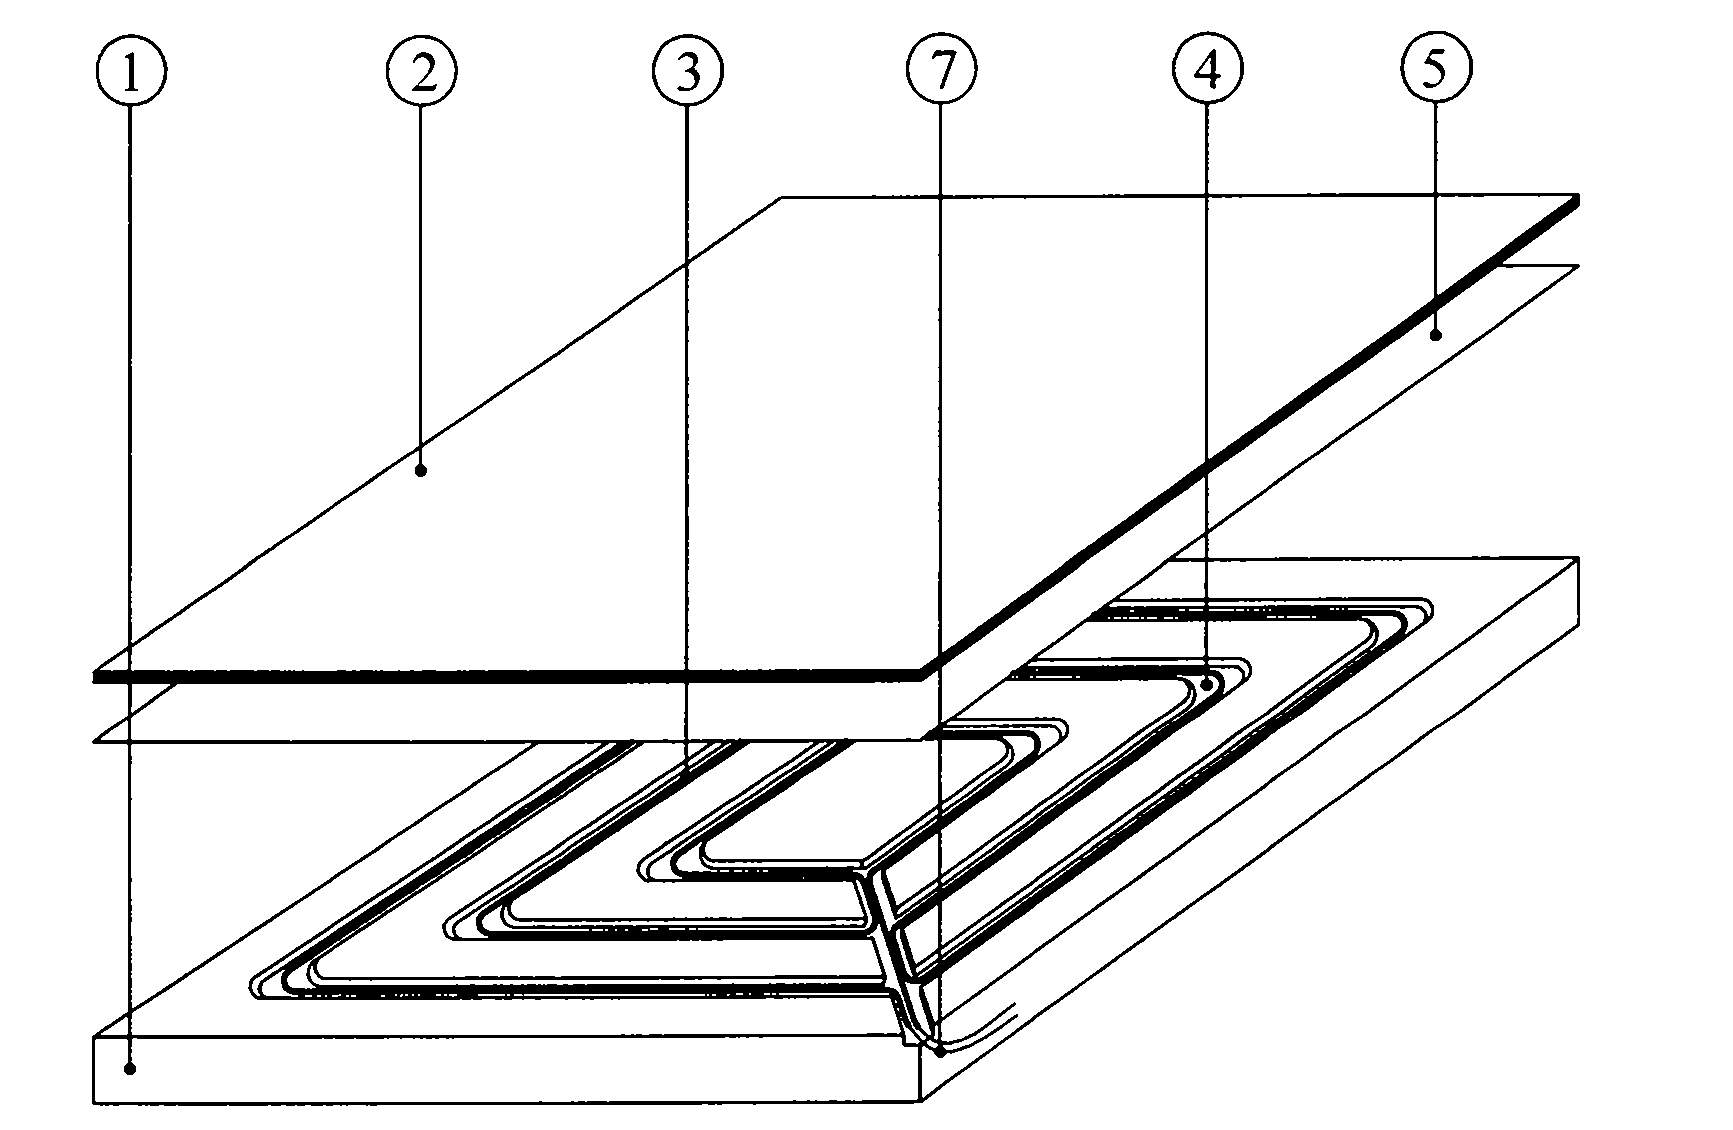 Spontaneous-heating plate